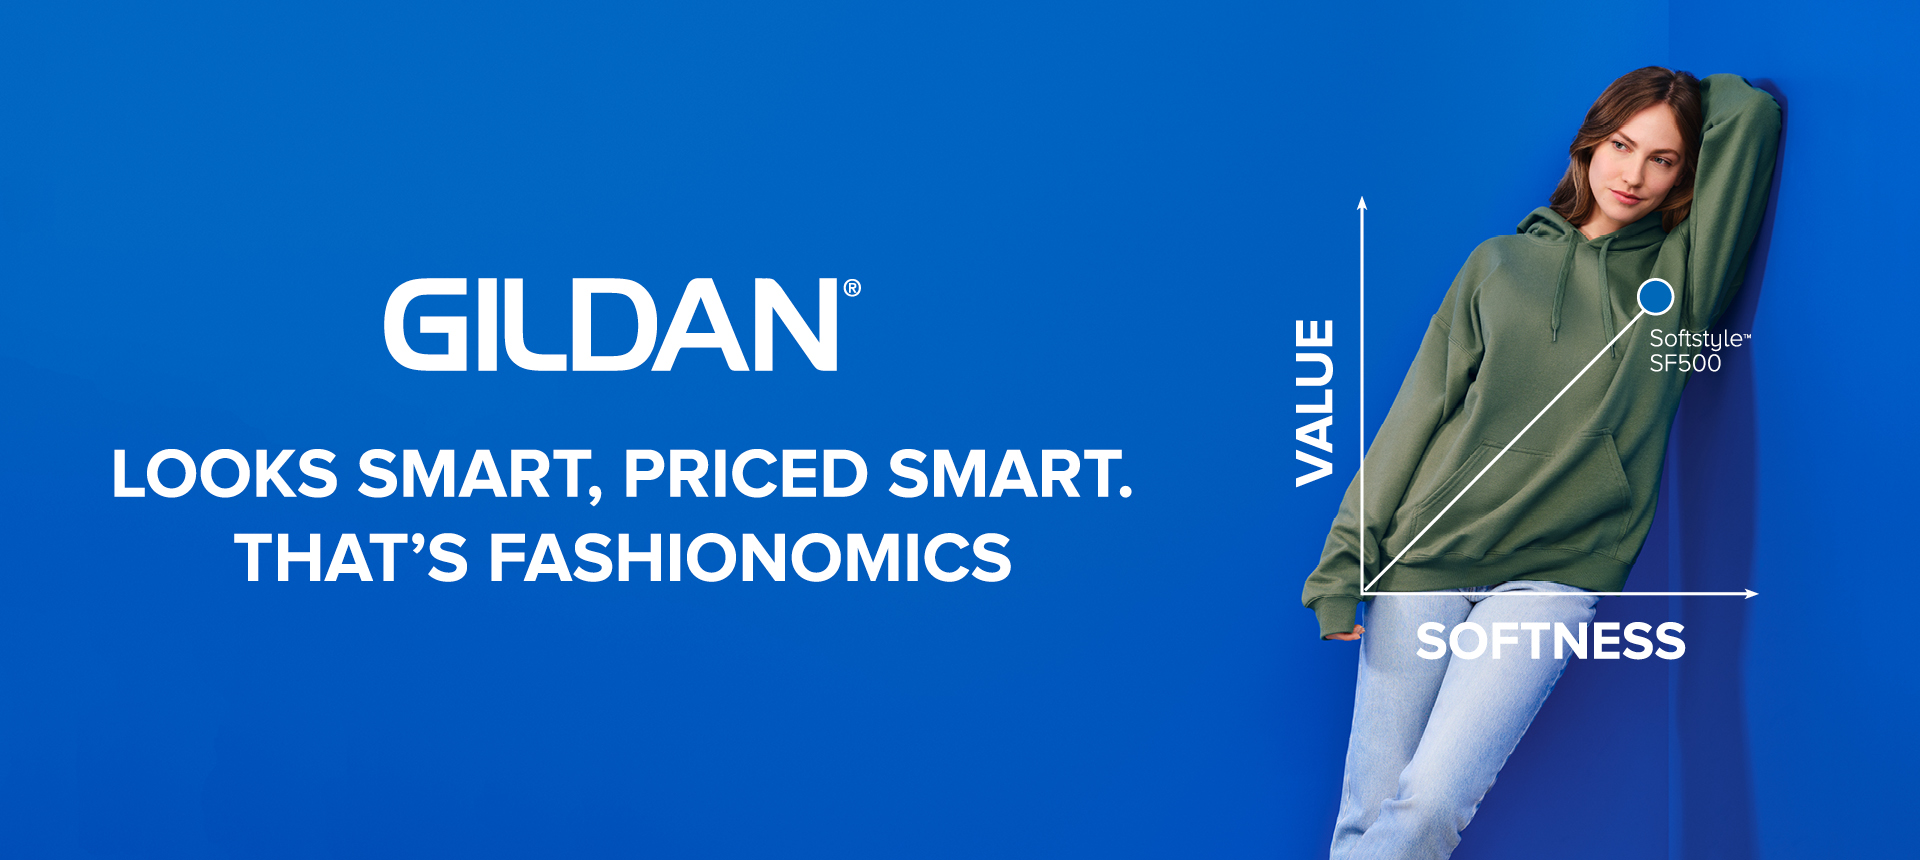 Gildan Fashionomics